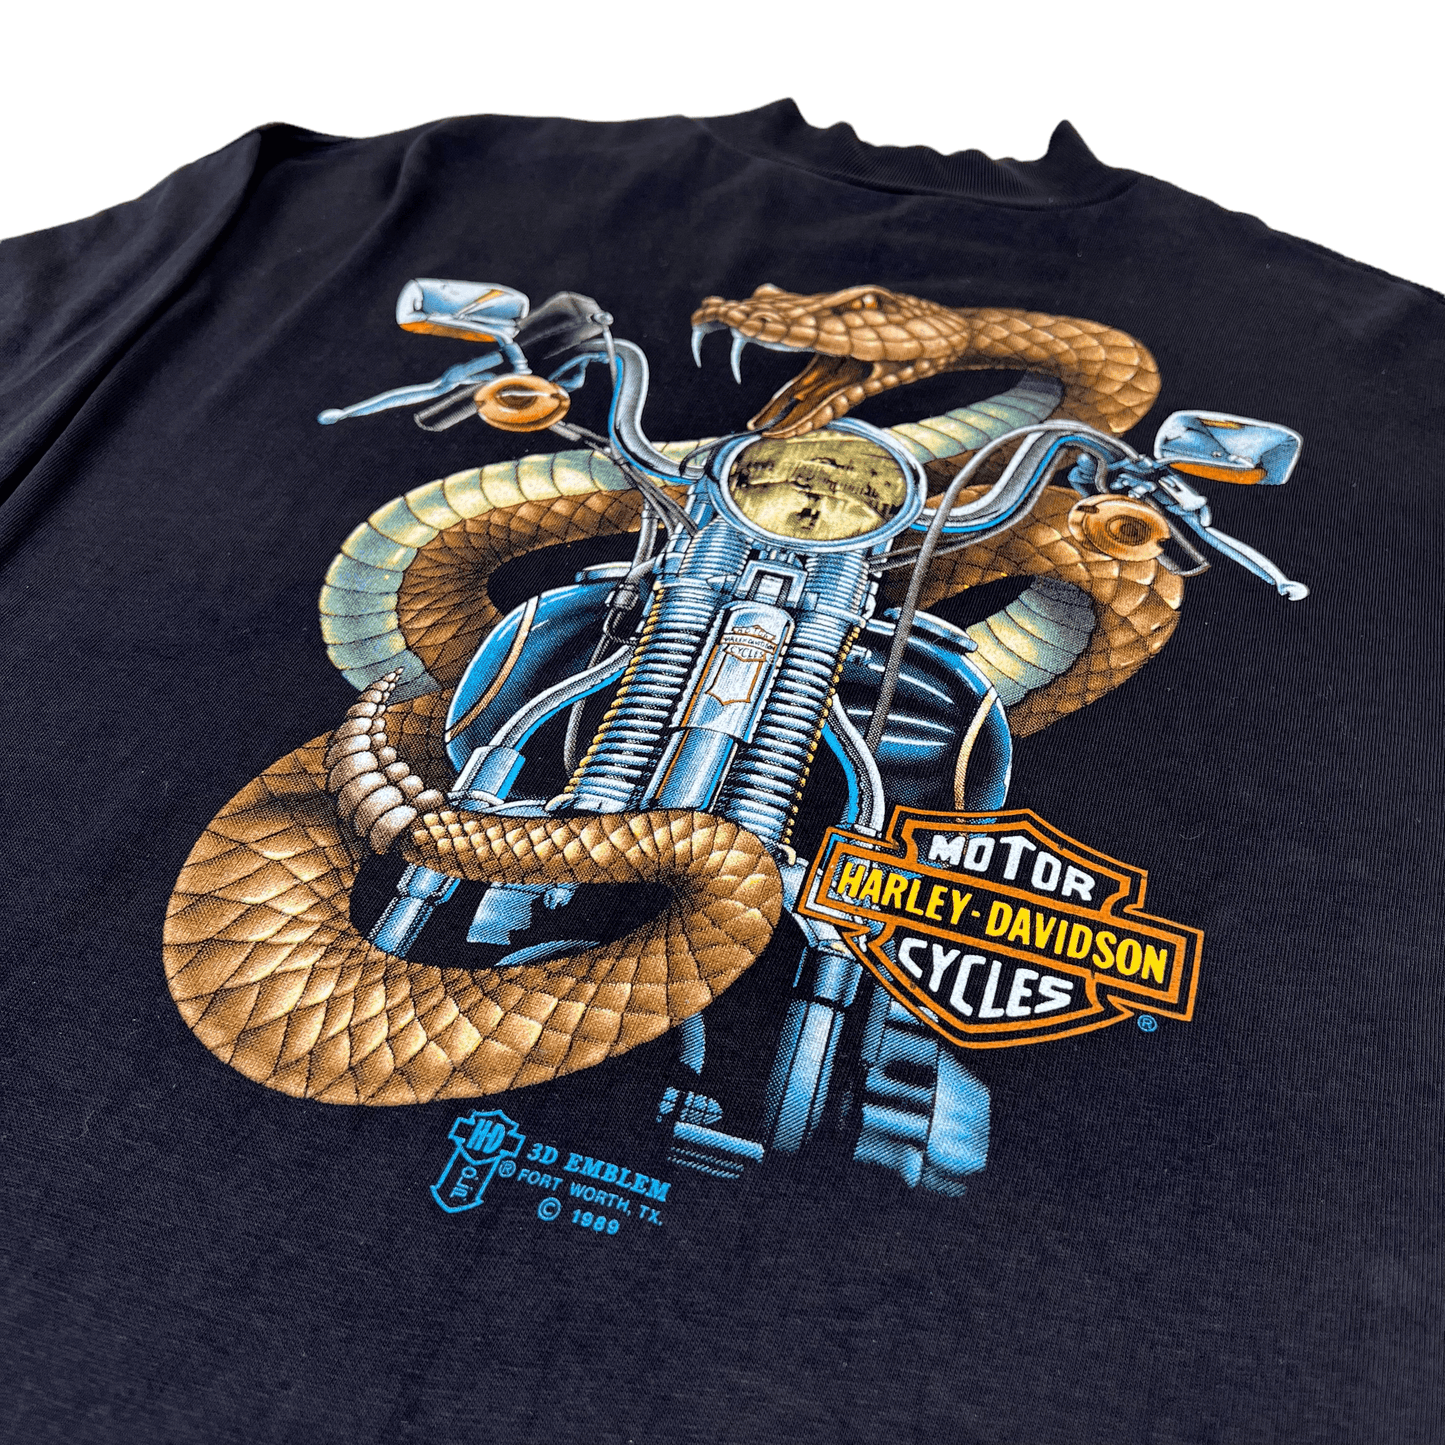 Vintage Harley Davidson T-shirt - Known Source